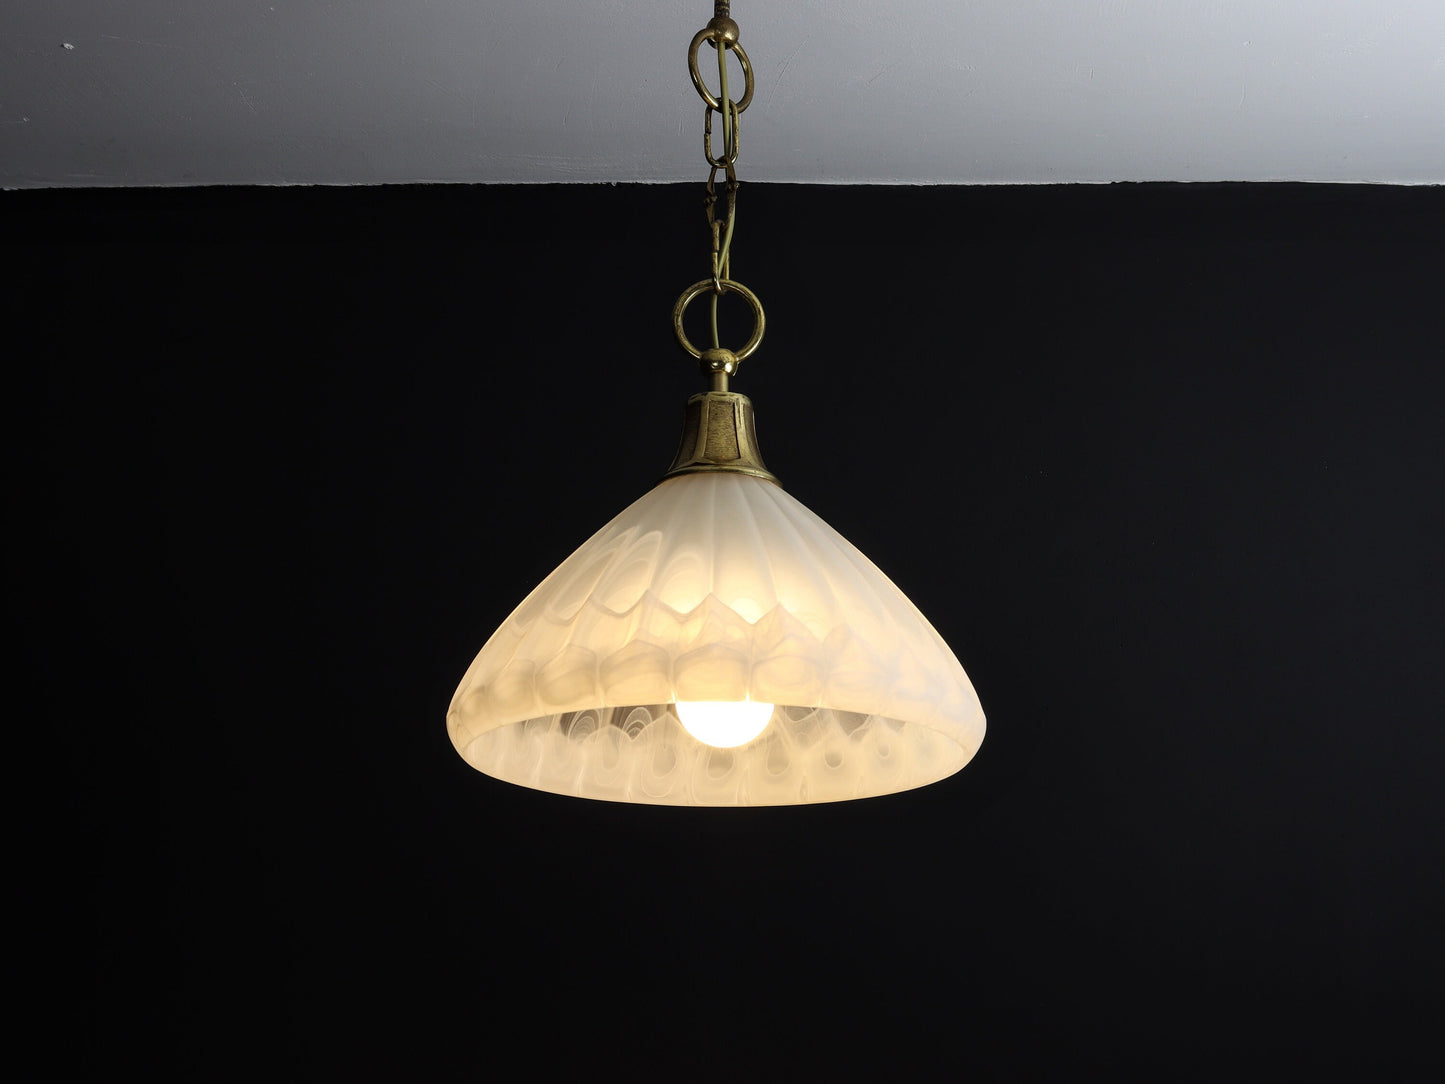 Brass Pendant Hanging Light | Entryway Lighting Fixture | Vintage Home Decor